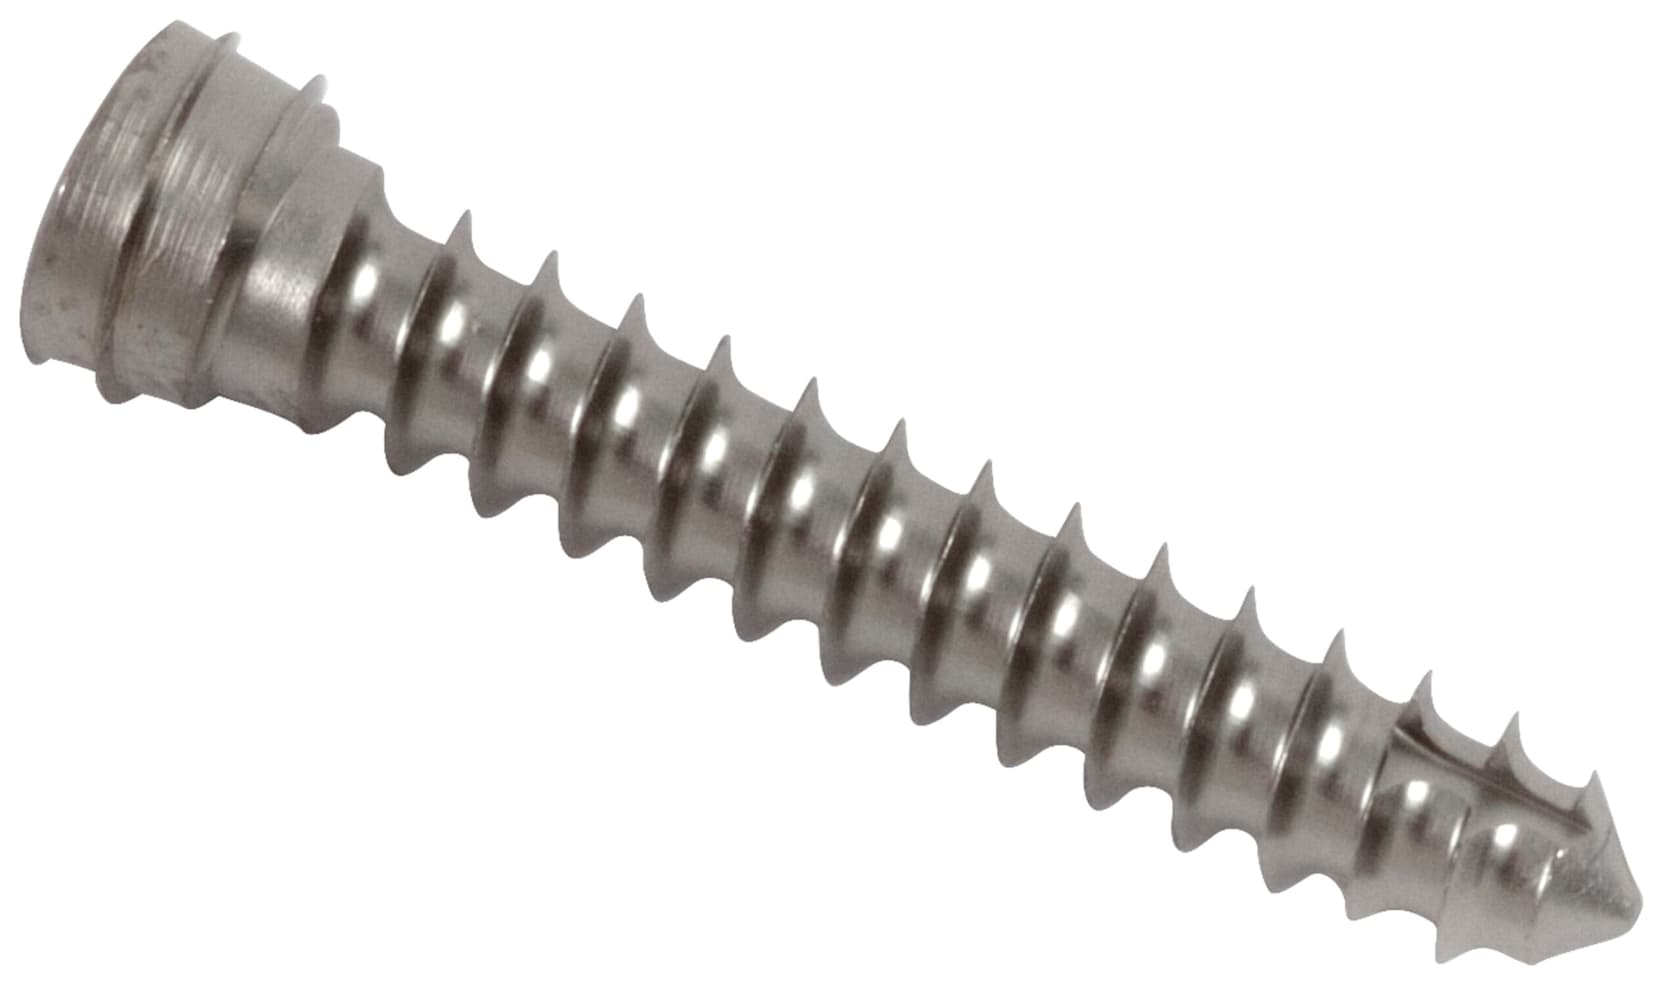 Cortical Locking Screw, 3.5 mm x 22 mm